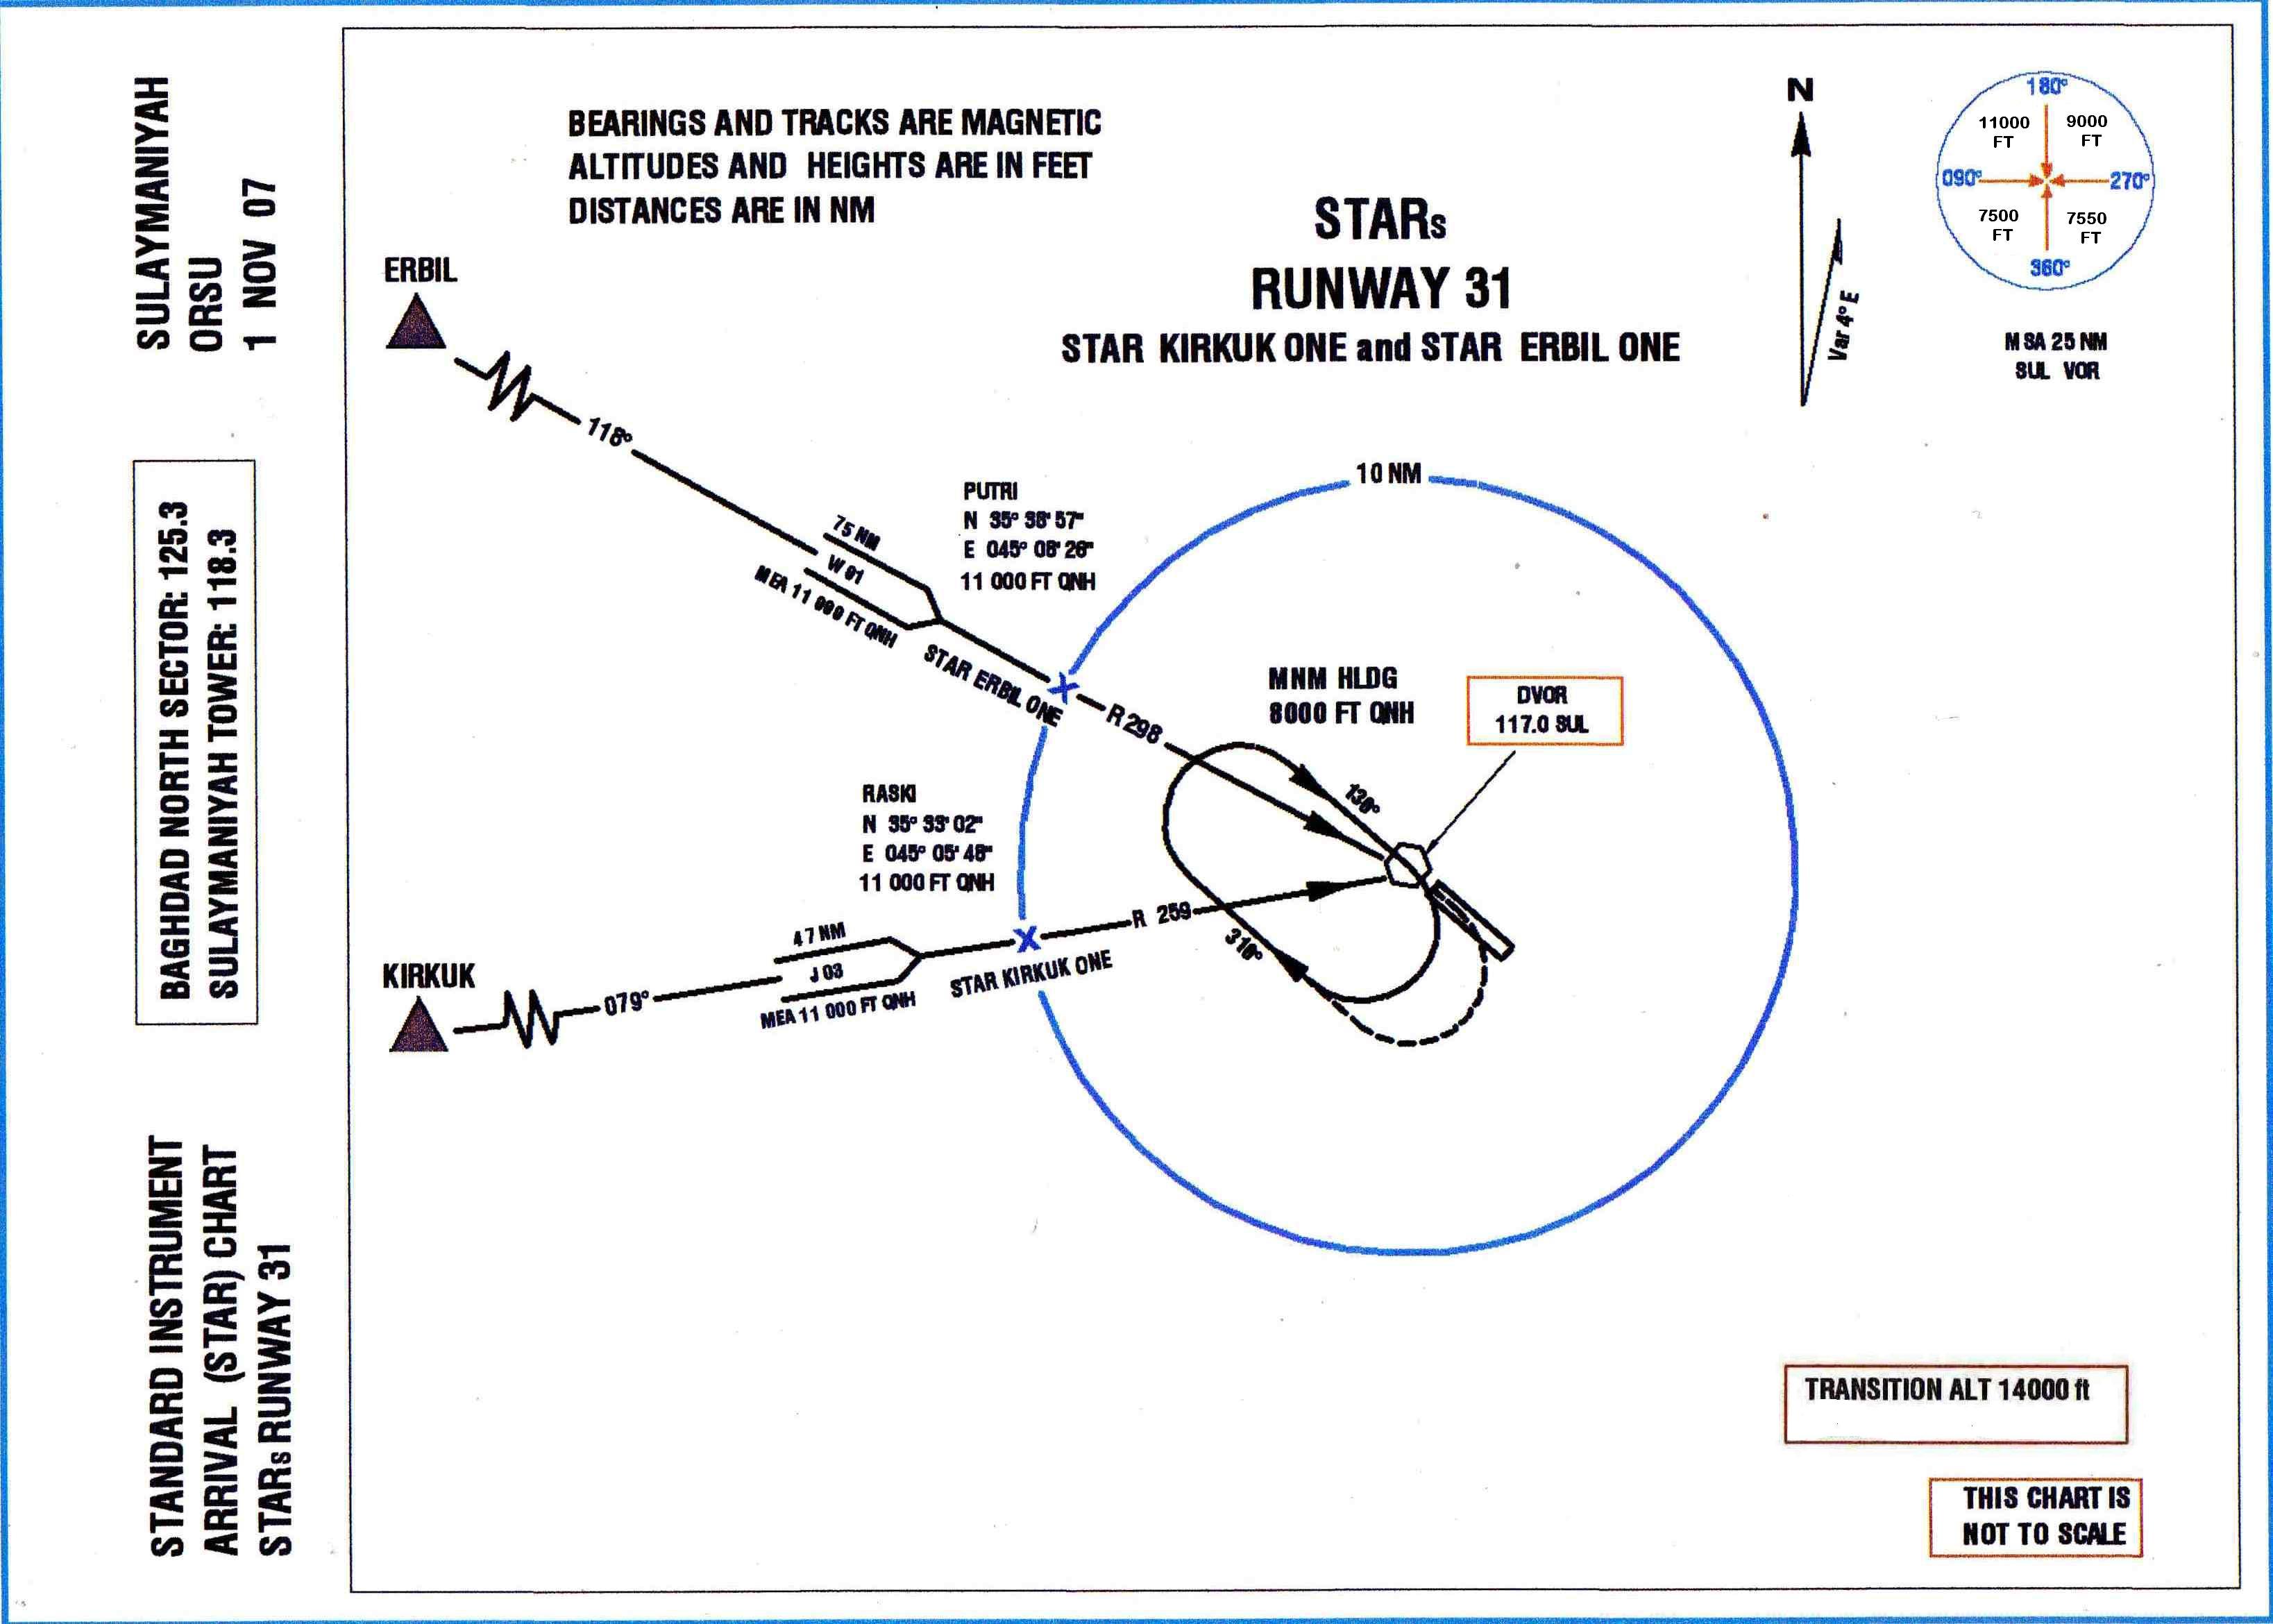 Paro Airport Approach Chart